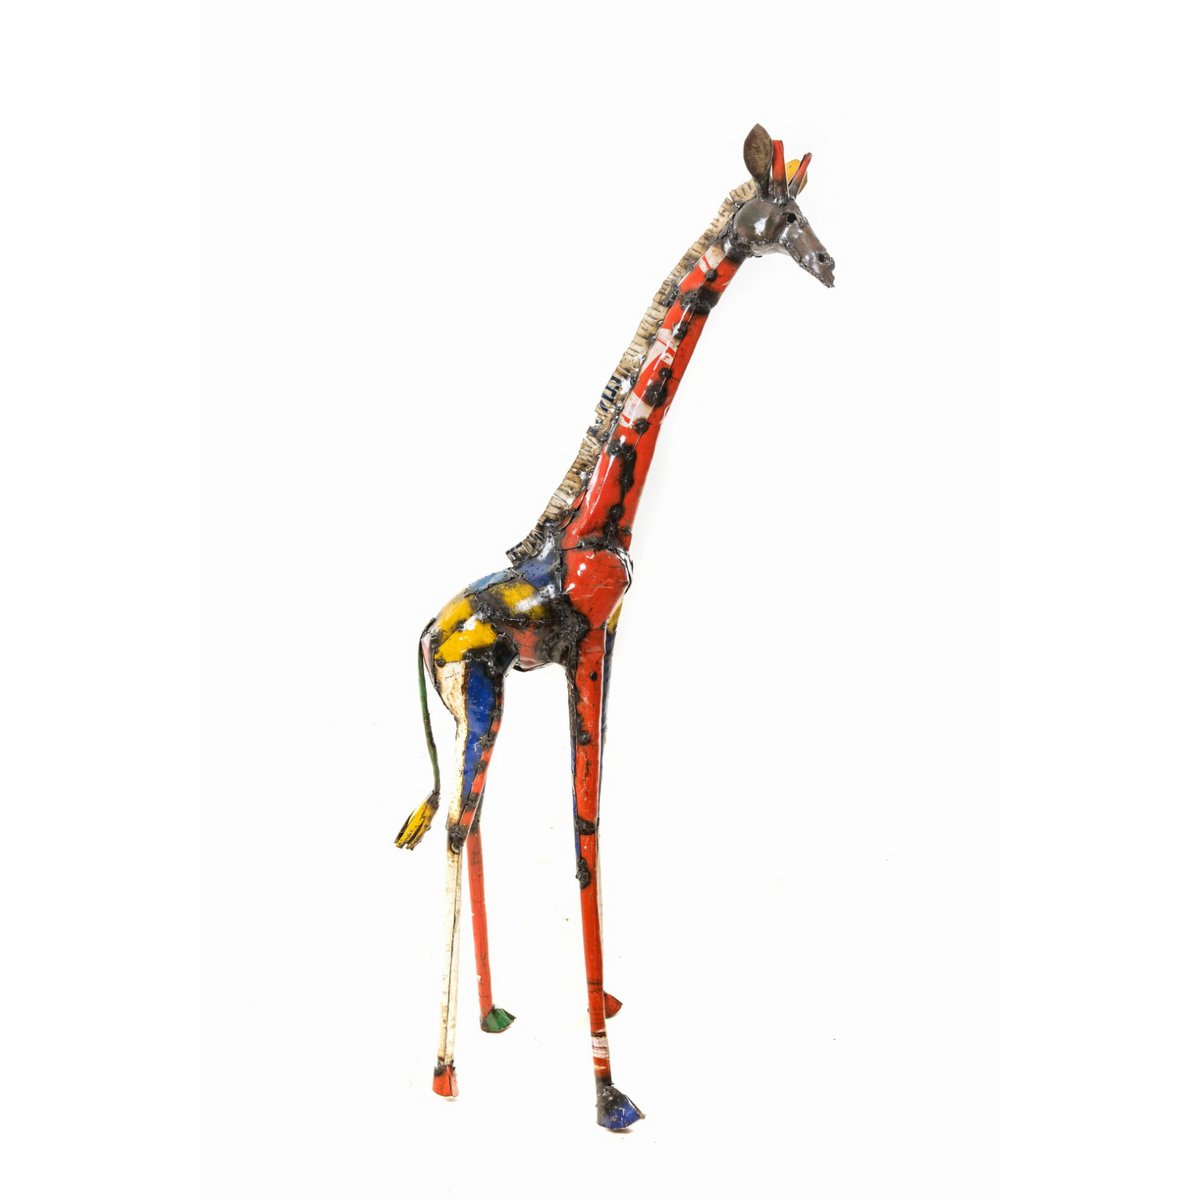 Einzigartige Gartenskulptur Giraffe, bunte Metallskulptur, großes Metall